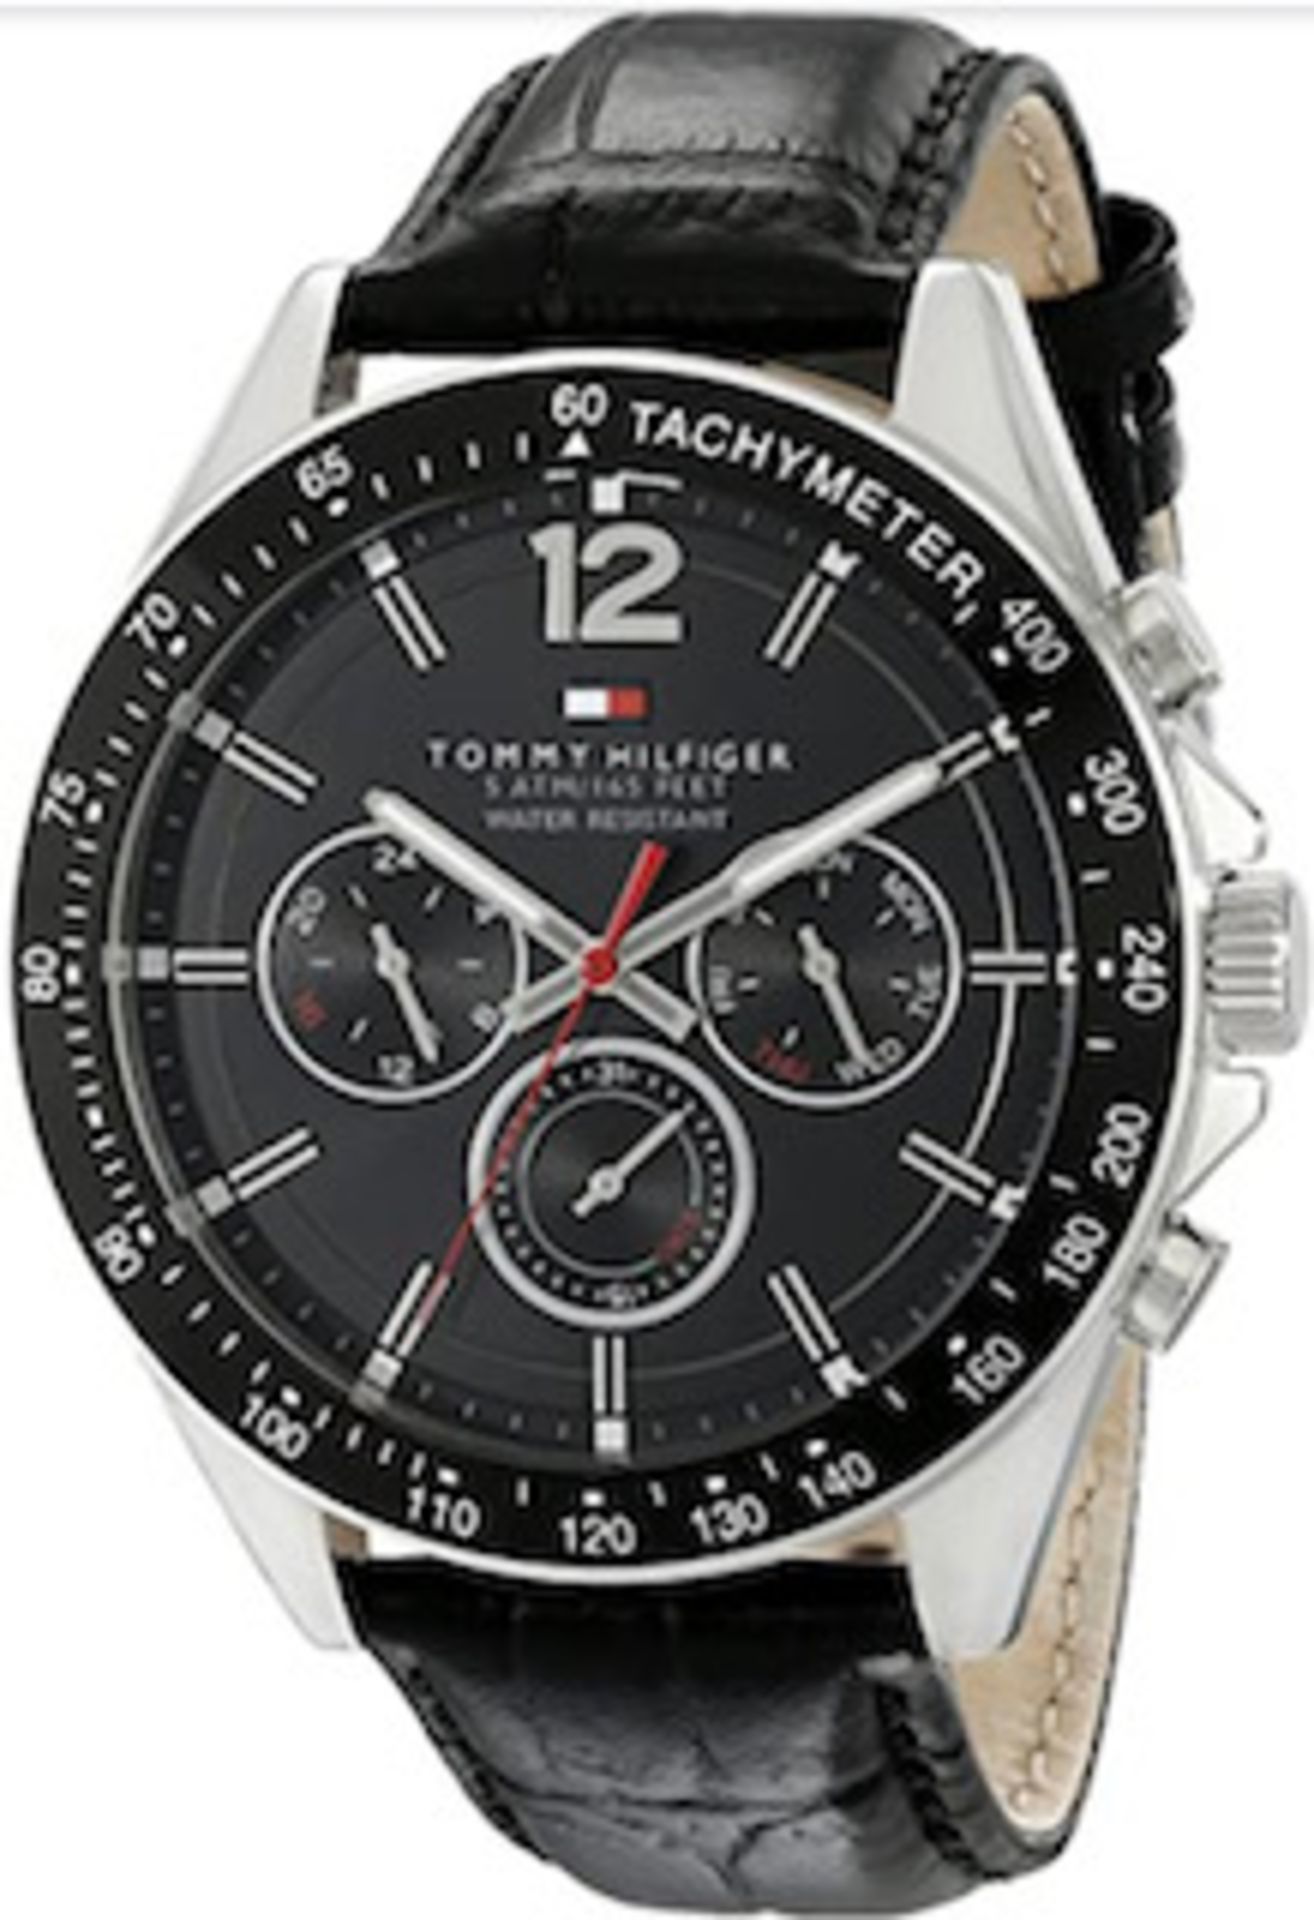 Men's Tommy Hilfiger Multi-Function Leather Strap Watch 1791117 Men's Tommy Hilfiger Watch - Image 2 of 5